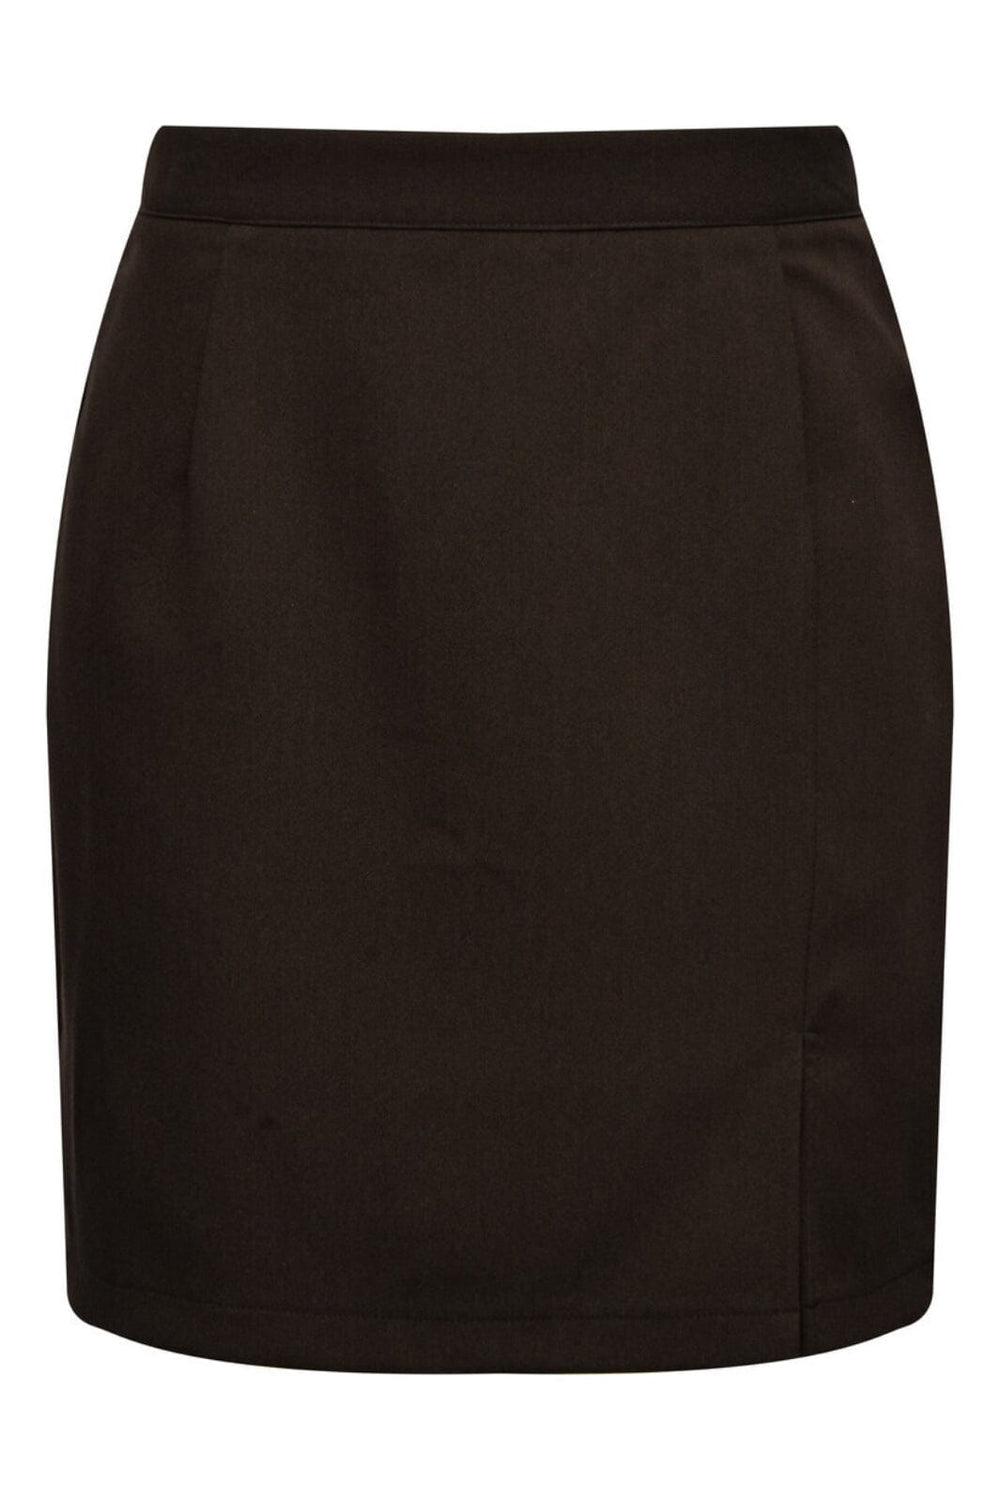 A-VIEW - Annali Skirt-1 - 117 Brown Nederdele 